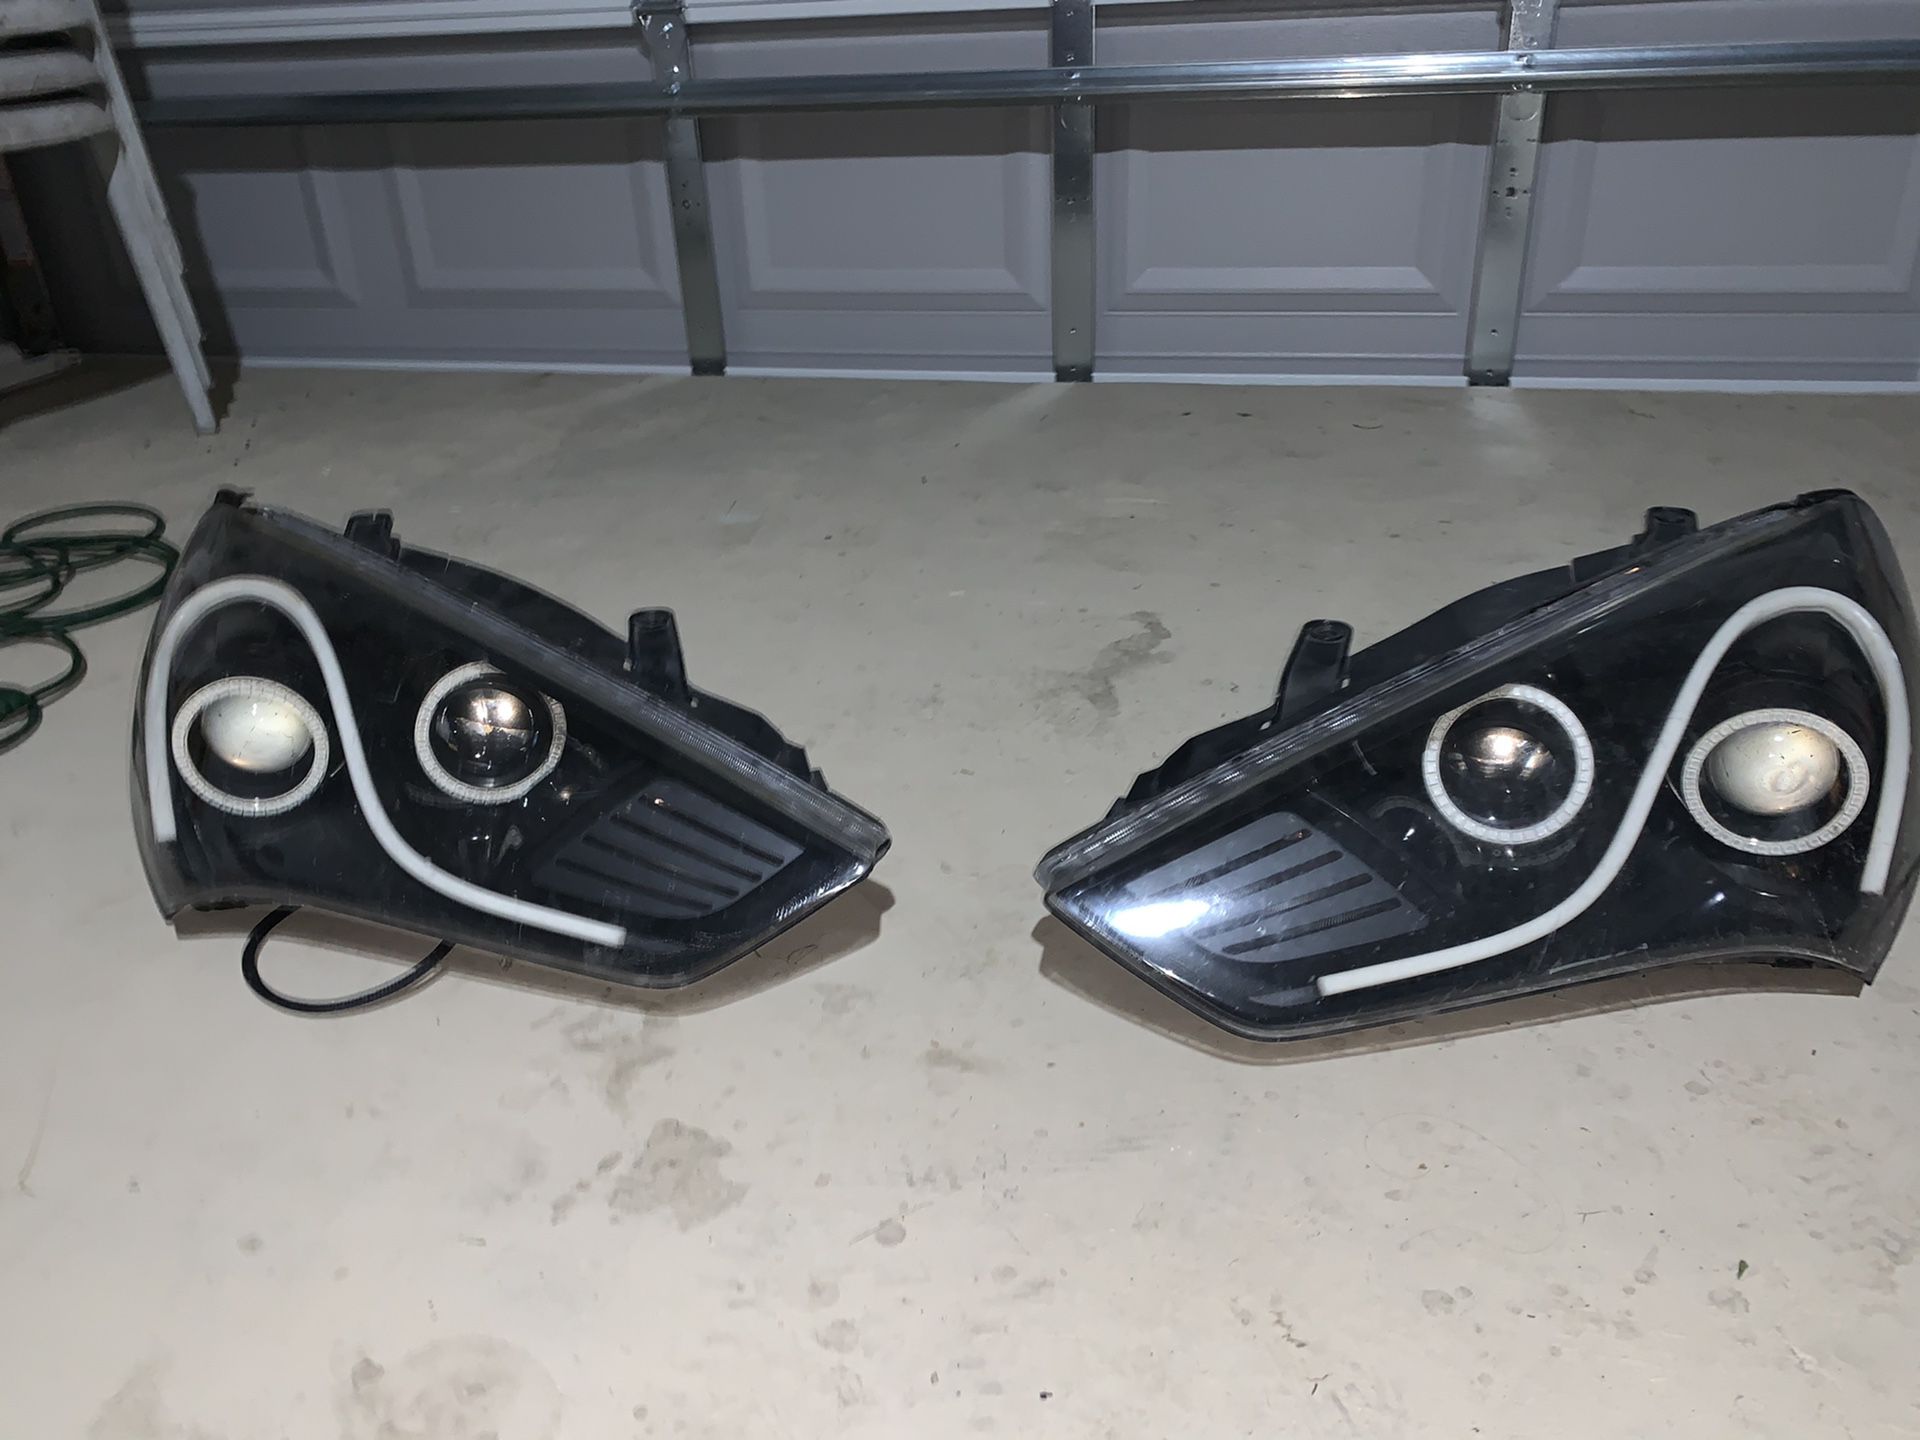 Genesis Coupe custom headlights